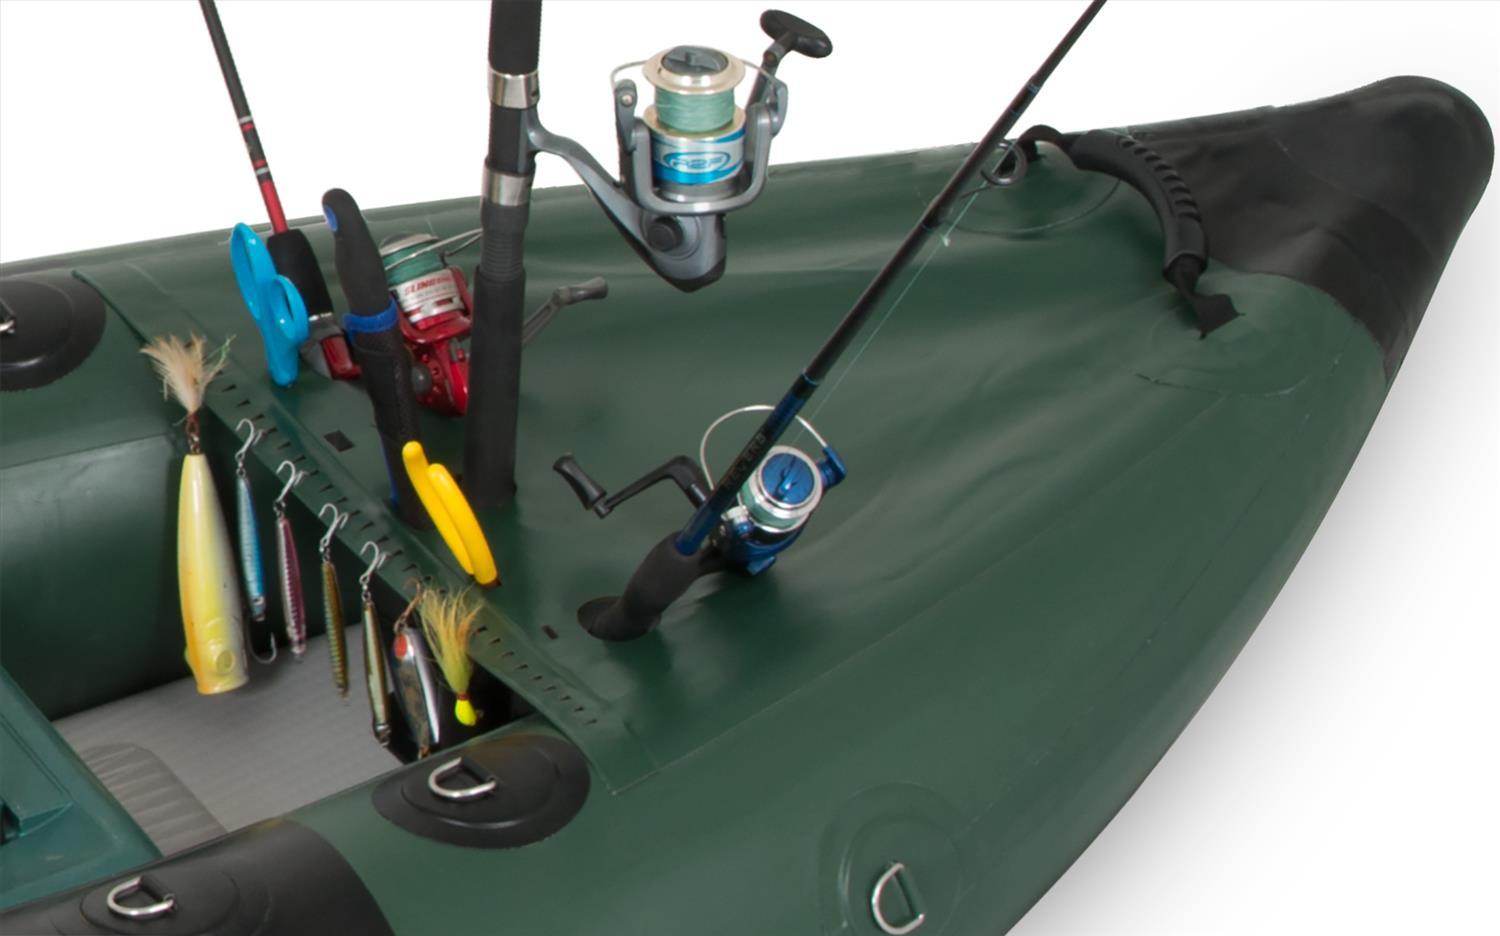 Sea Eagle, Sea Eagle 350FX Explorer Inflatable Kayak Swivel Seat Fishing Rig Package Green Black New